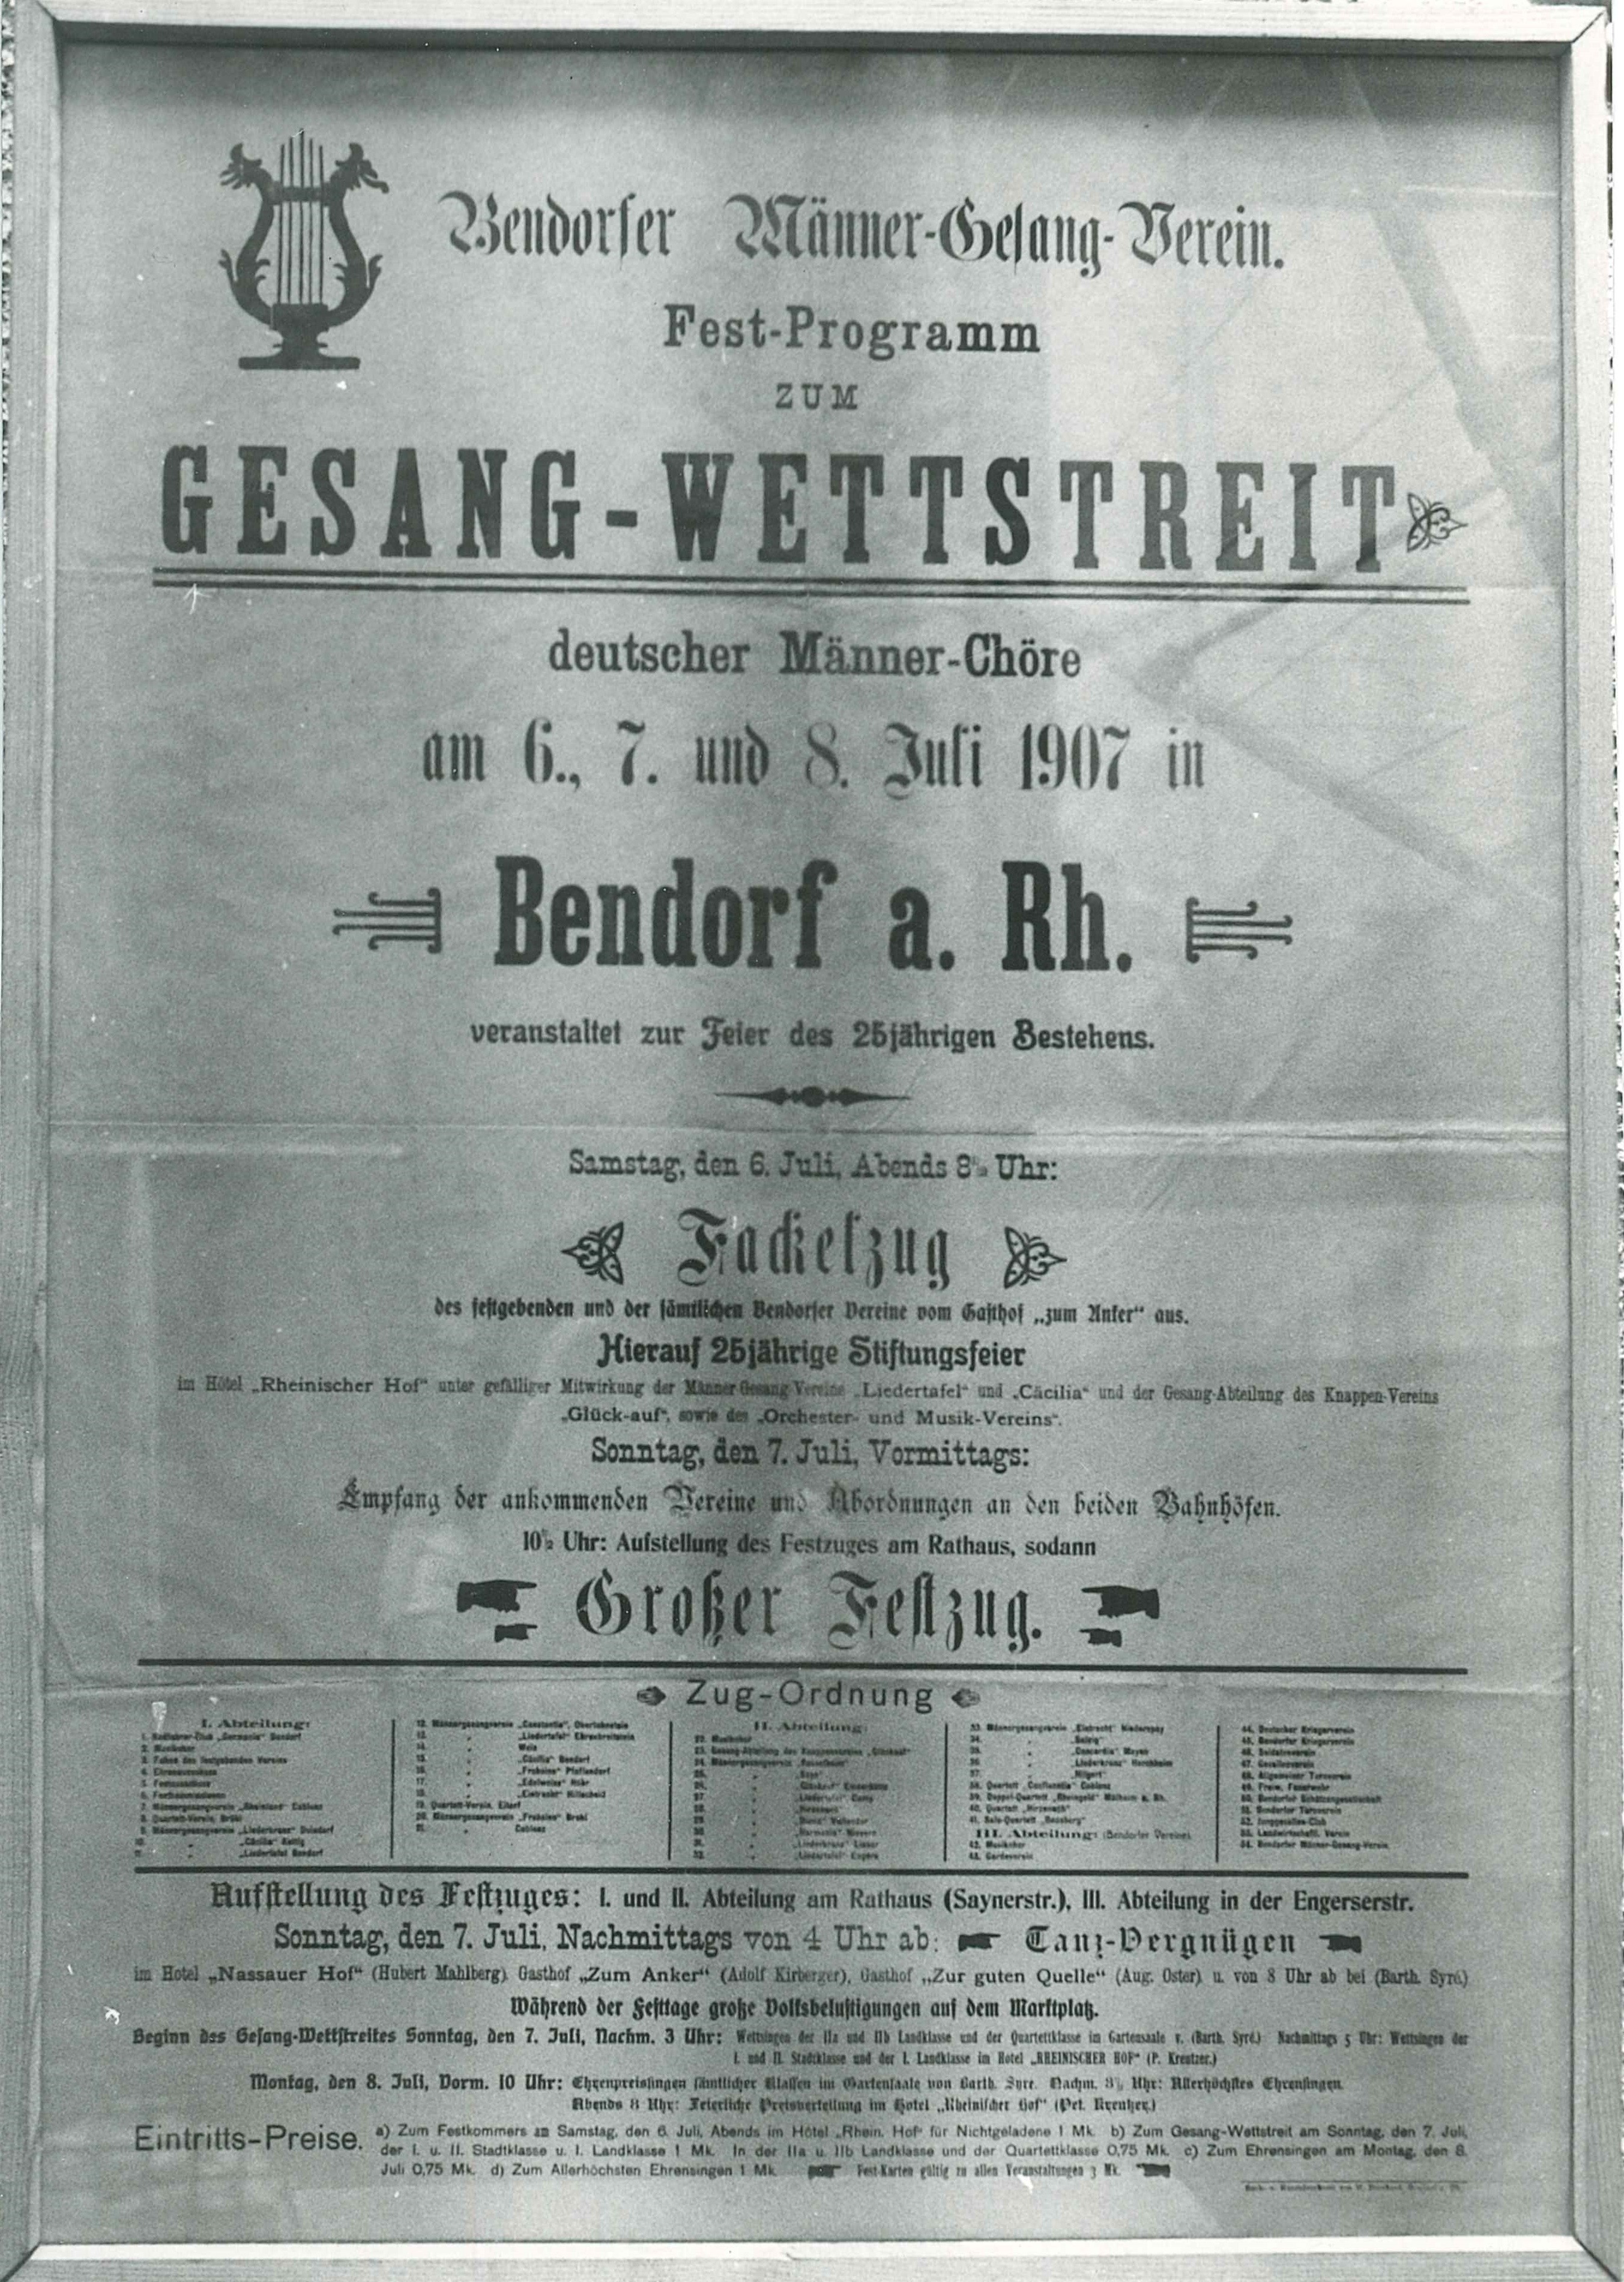 Festprogramm Gesang-Wettstreit deutscher Männerchöre, Bendorf 1907 (REM CC BY-NC-SA)